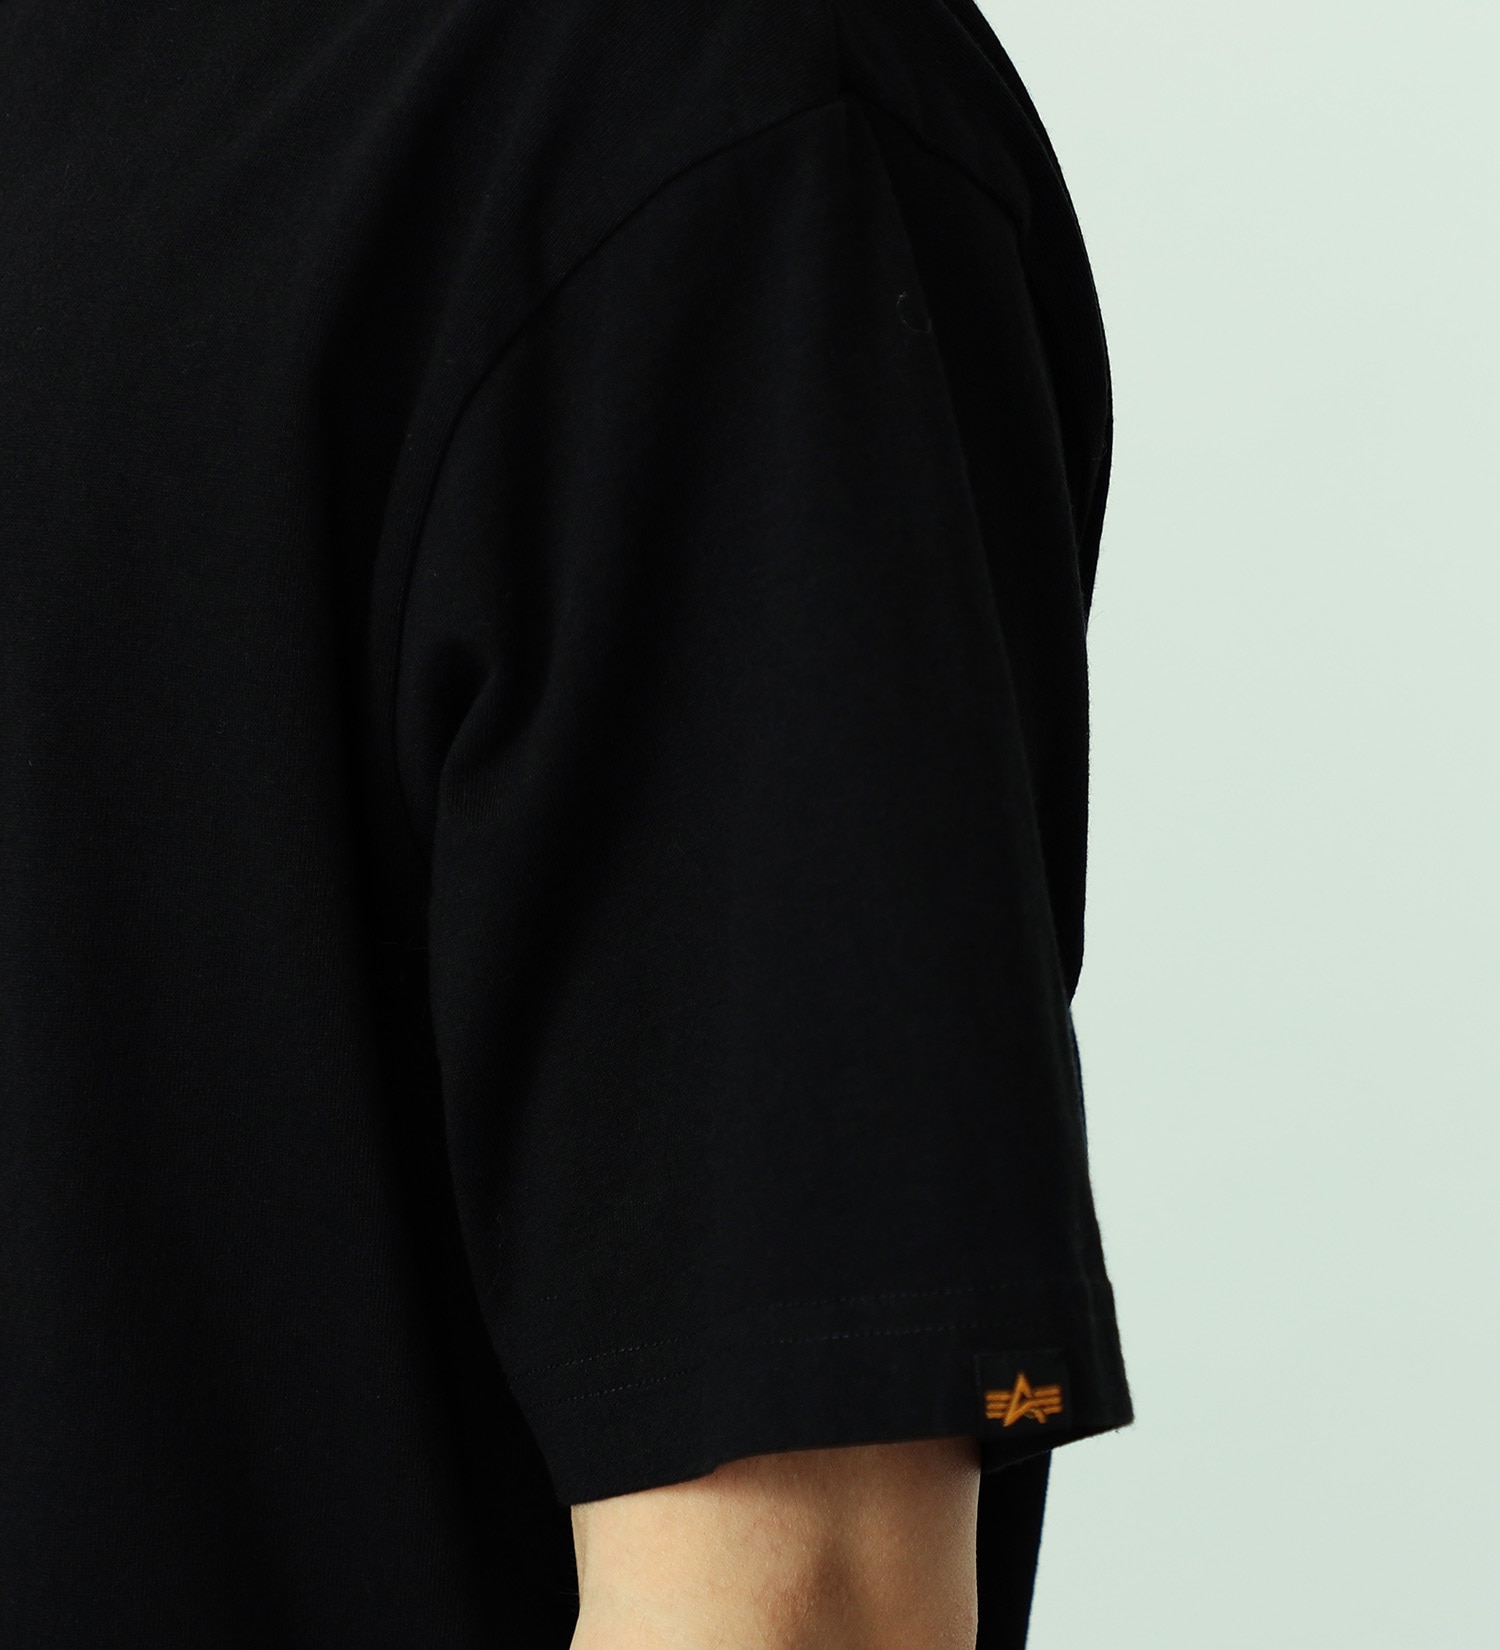 ALPHA(アルファ)のAマークロゴプリントTシャツ 半袖 (グリーンフロッグスキンカモ)|トップス/Tシャツ/カットソー/メンズ|ブラック